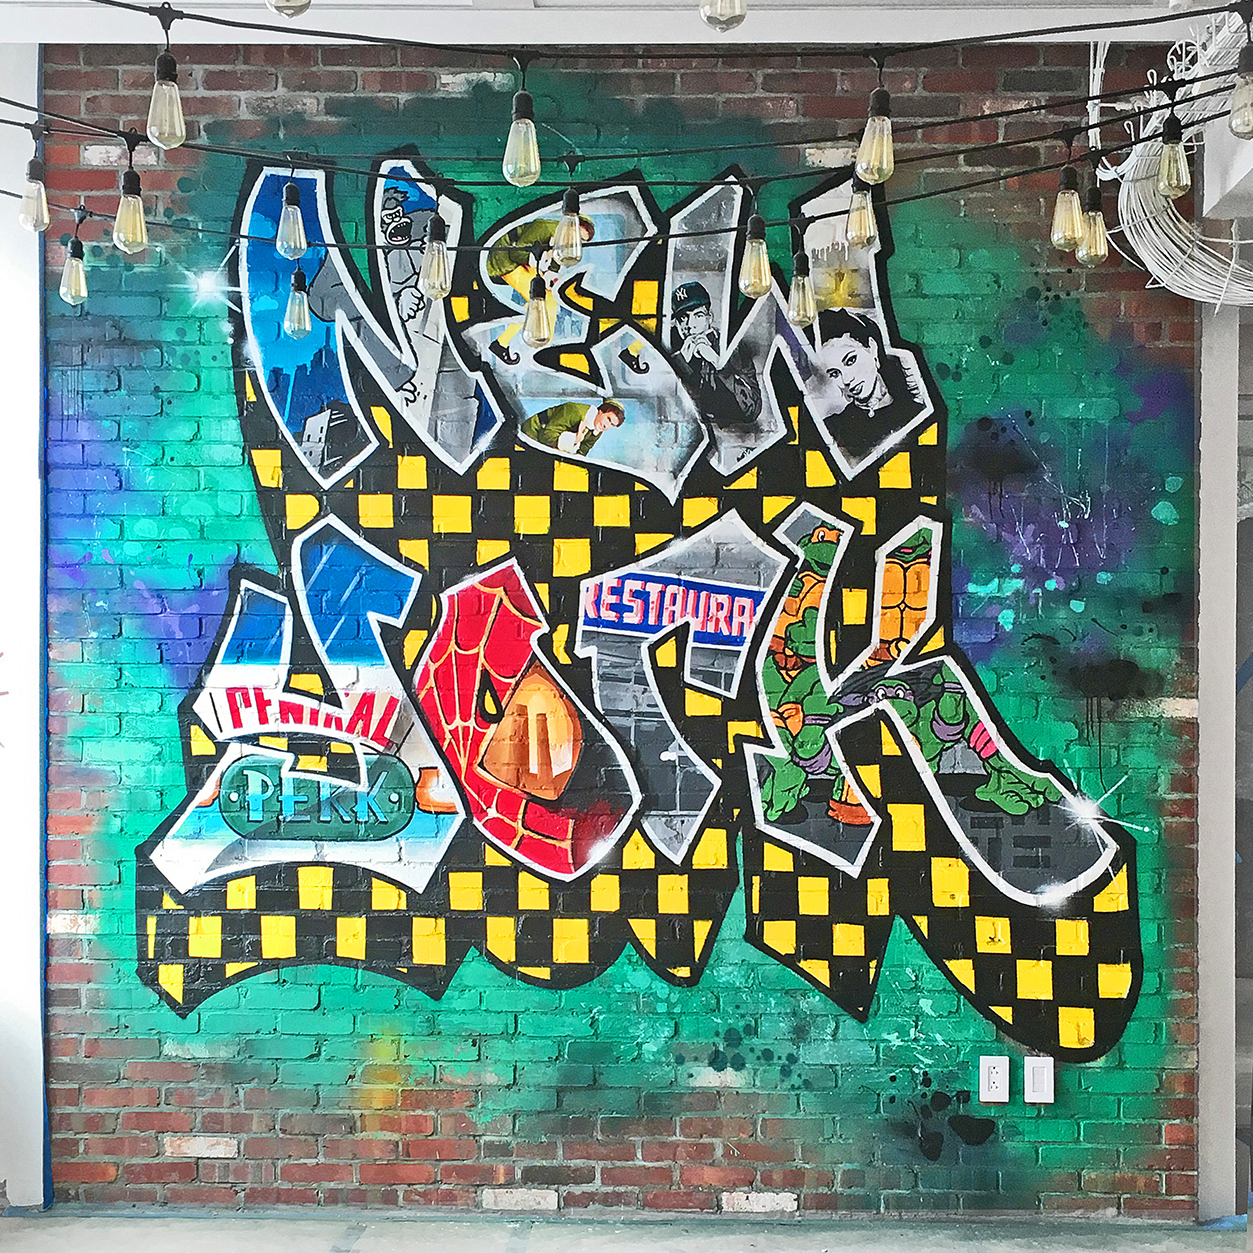 New York Graffiti Artist For Hire - NY Street Art Mural Company